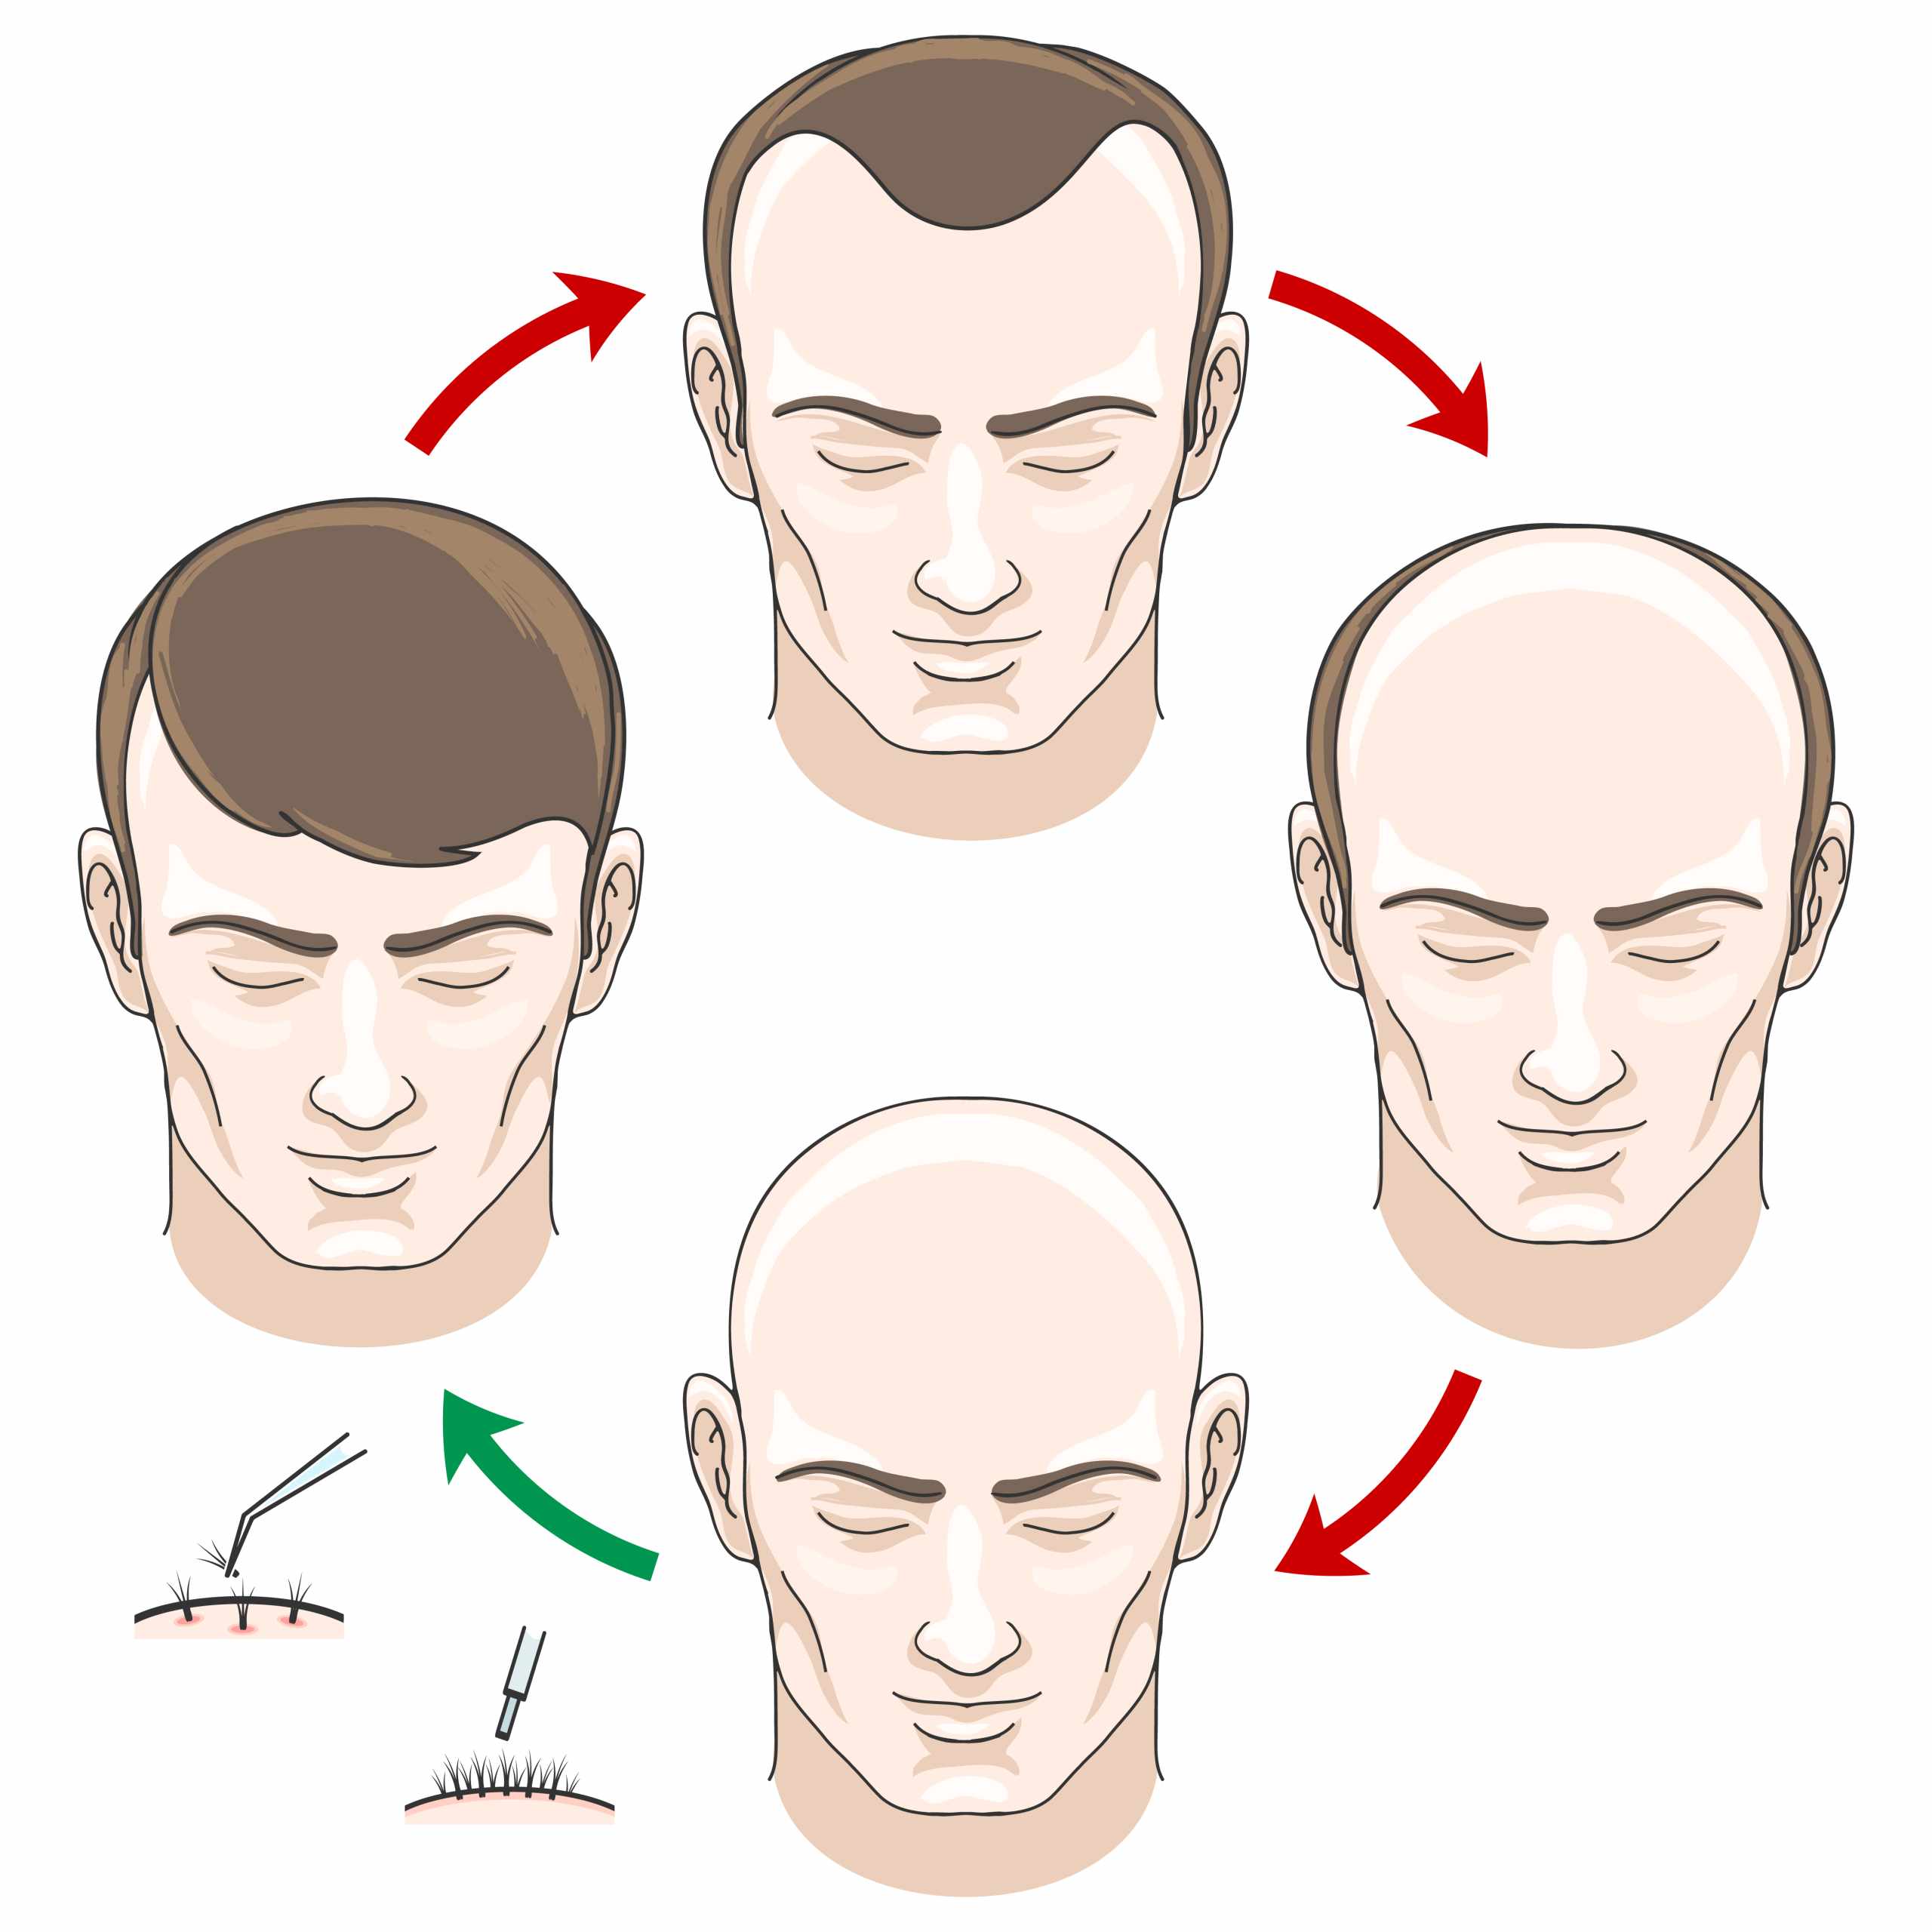 Hair Transplant Guide